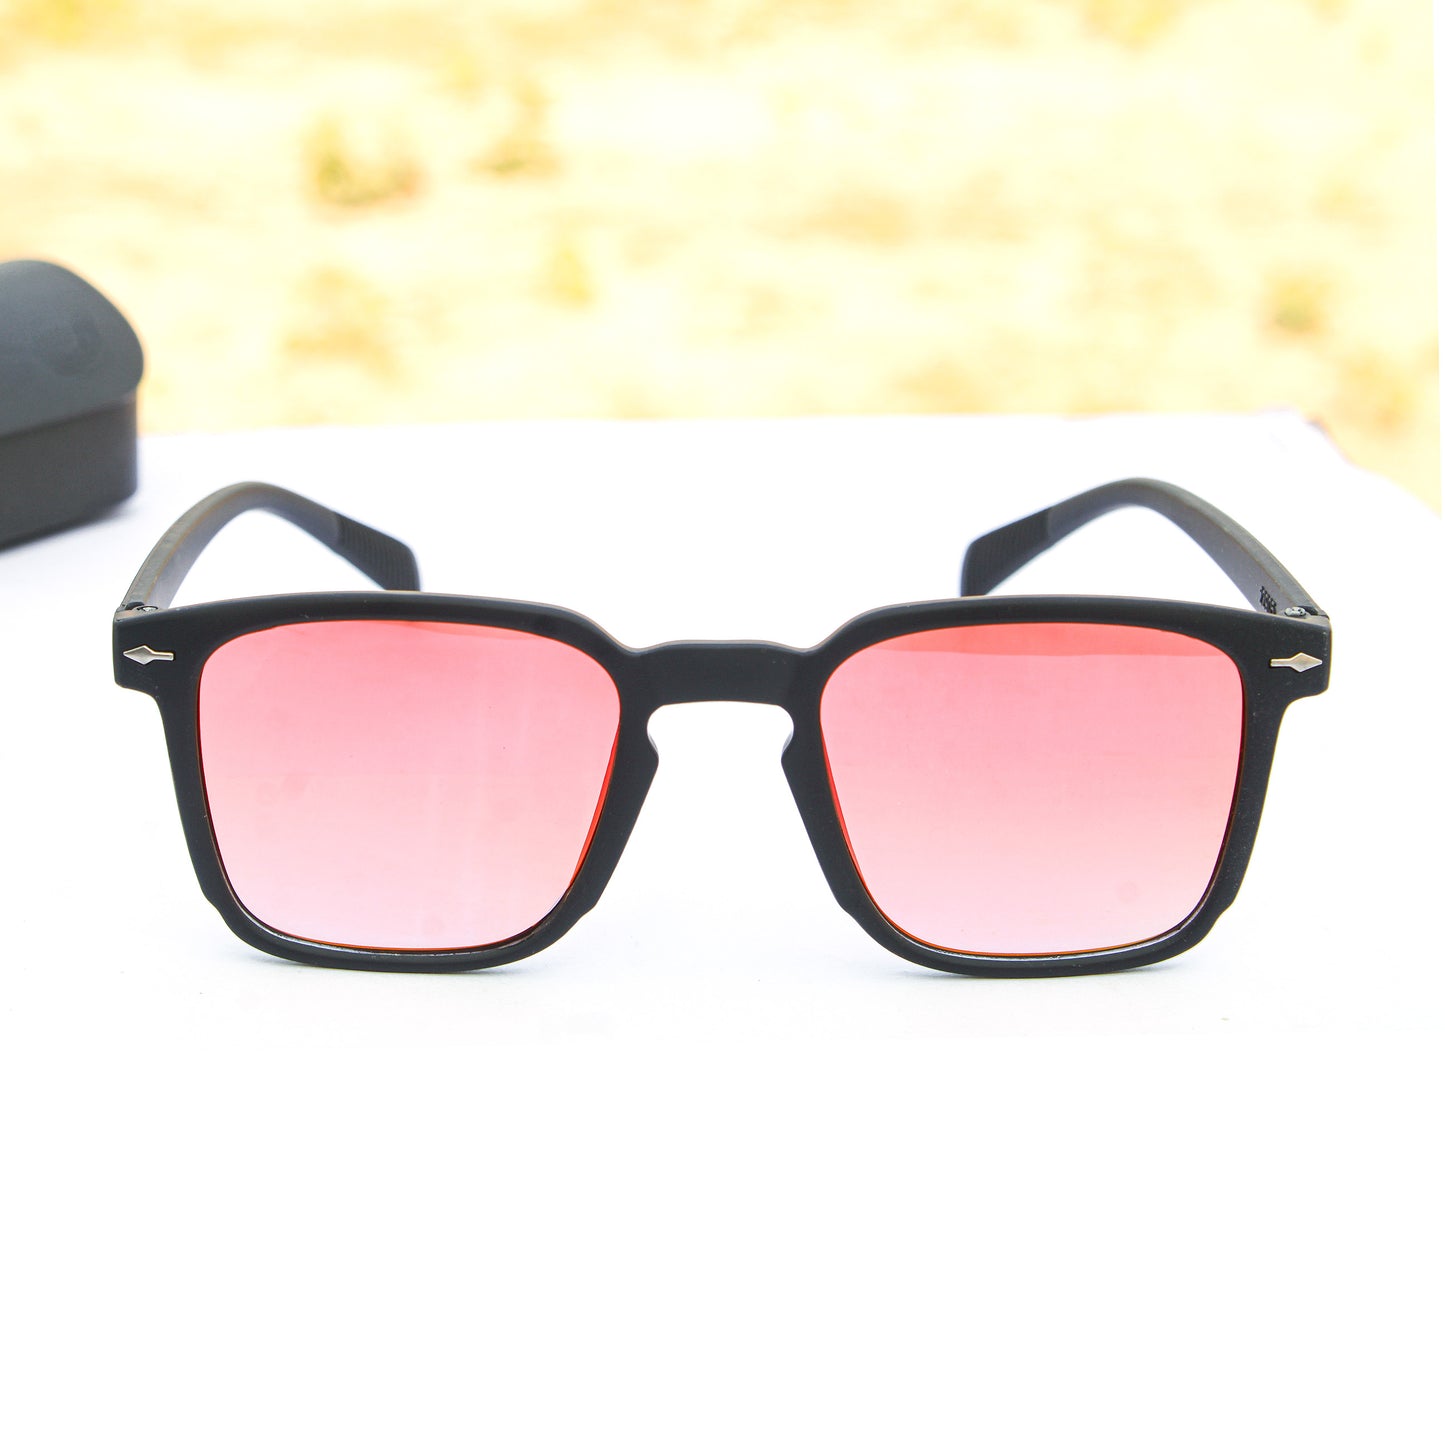 Square Mirrored Red Sunglasses